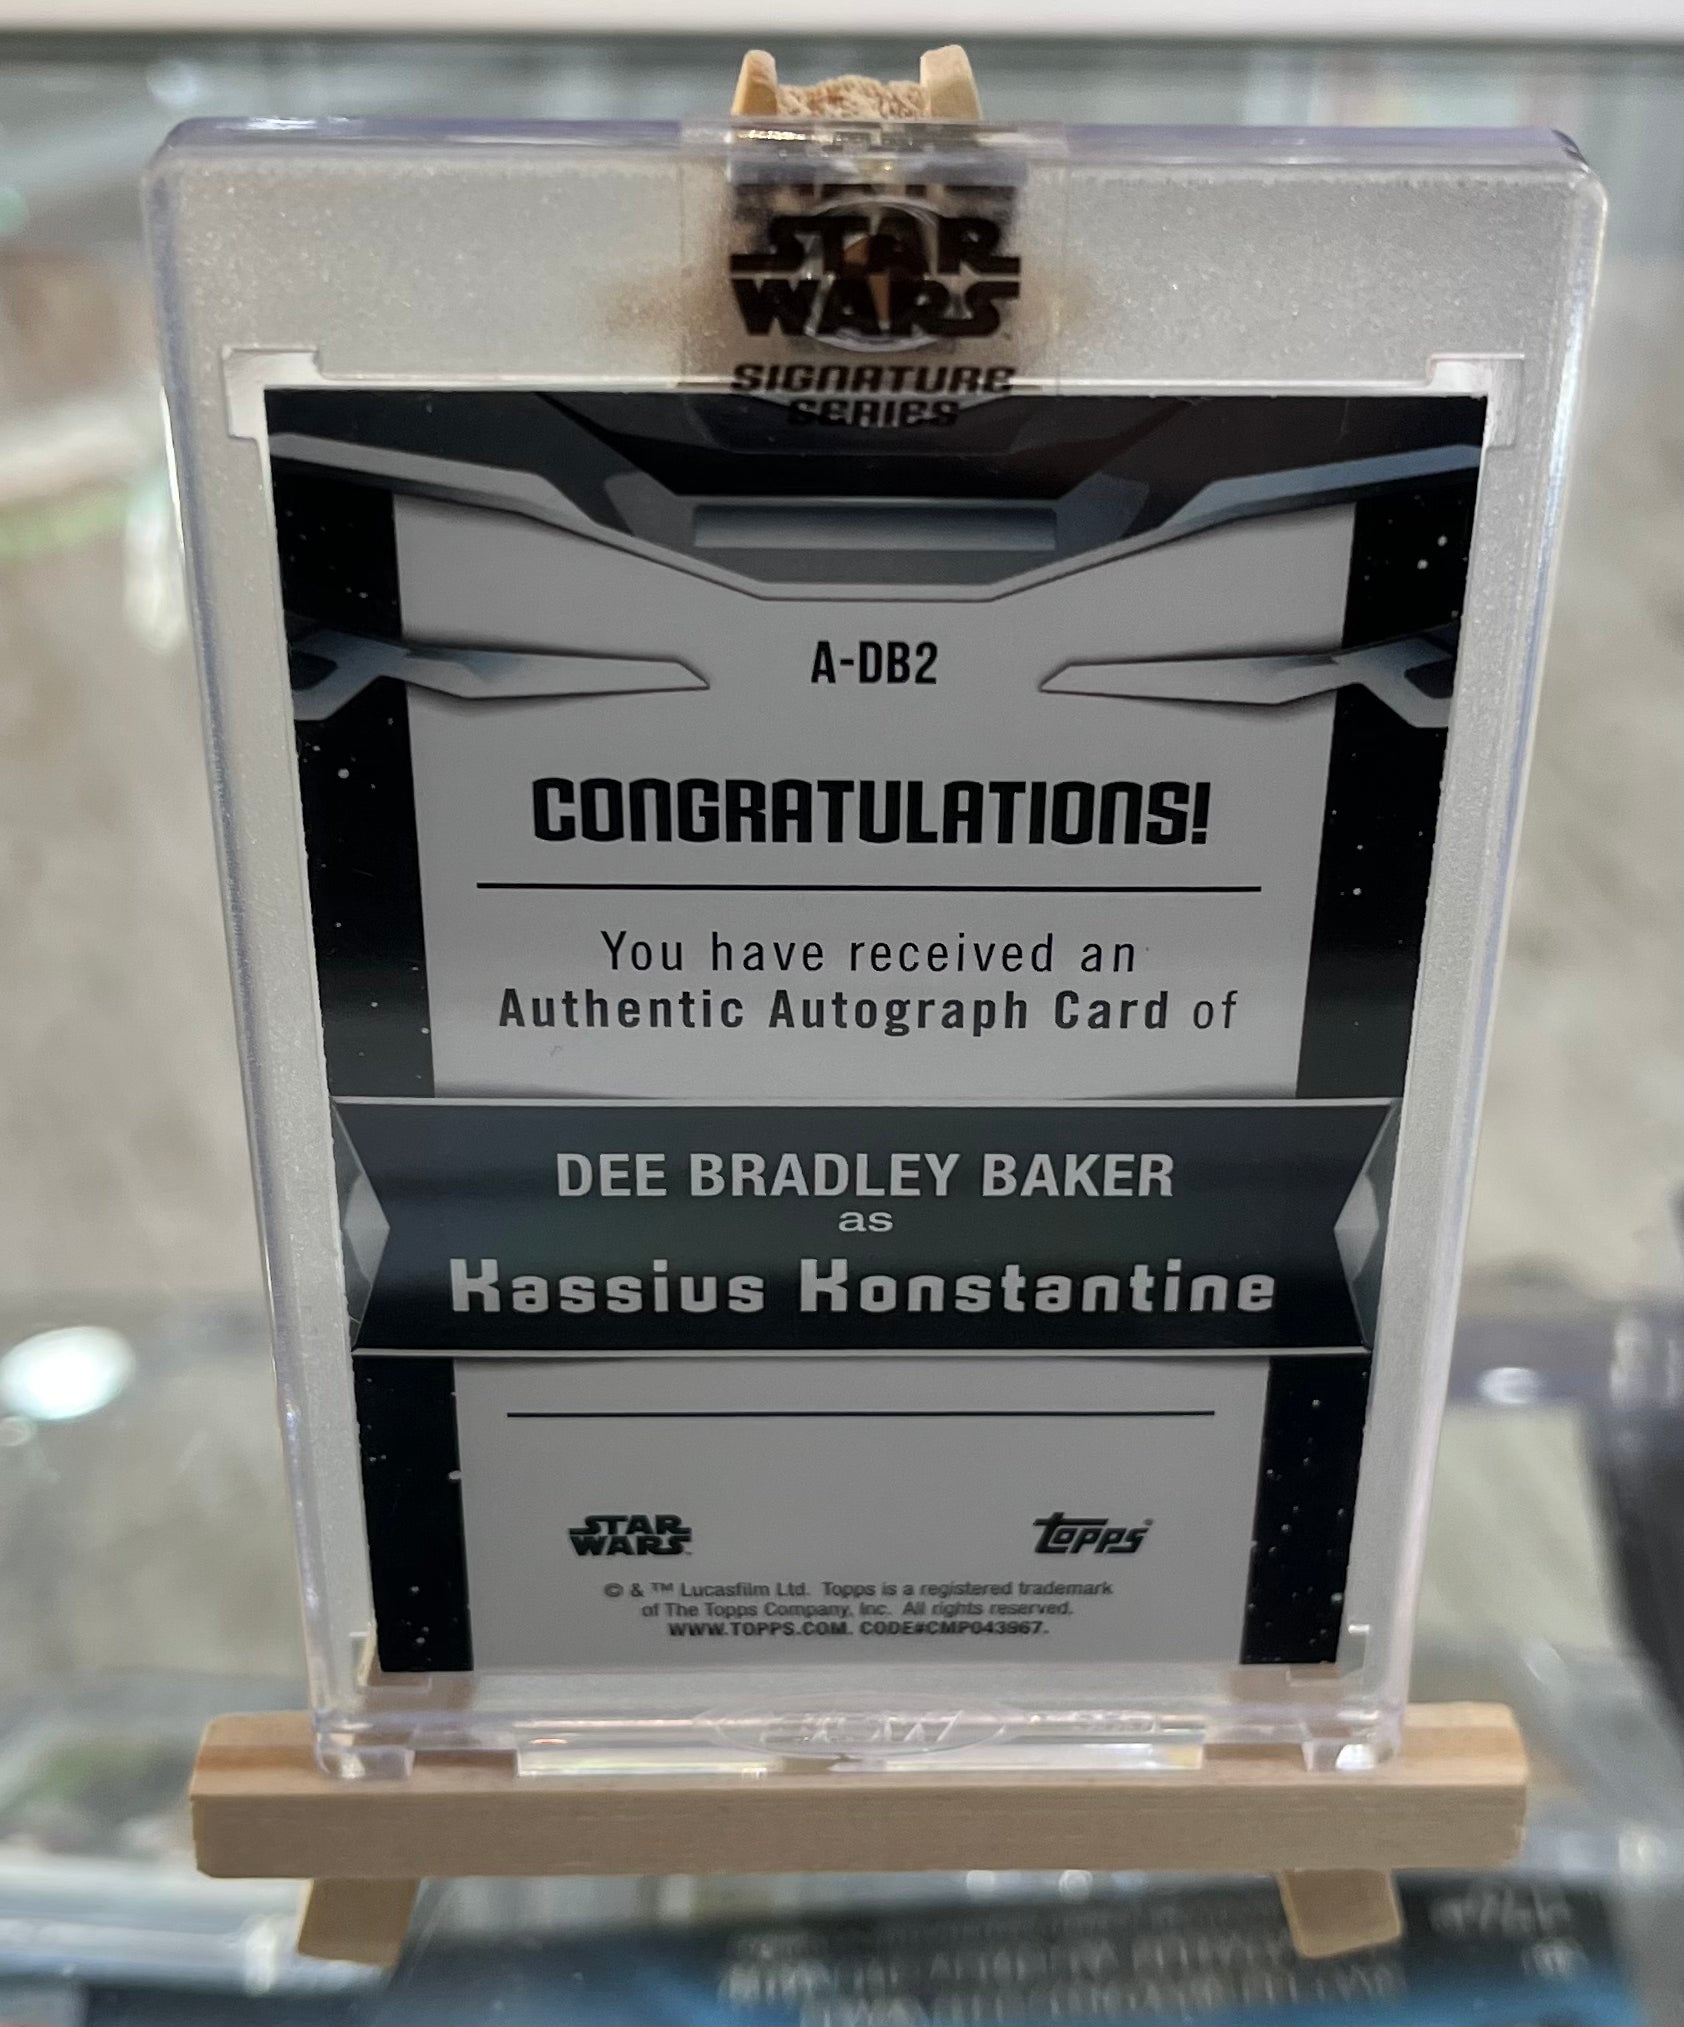 Star Wars Topps Authentic Autograph Card - Dee Bradley Baker as Kassius Konstantine